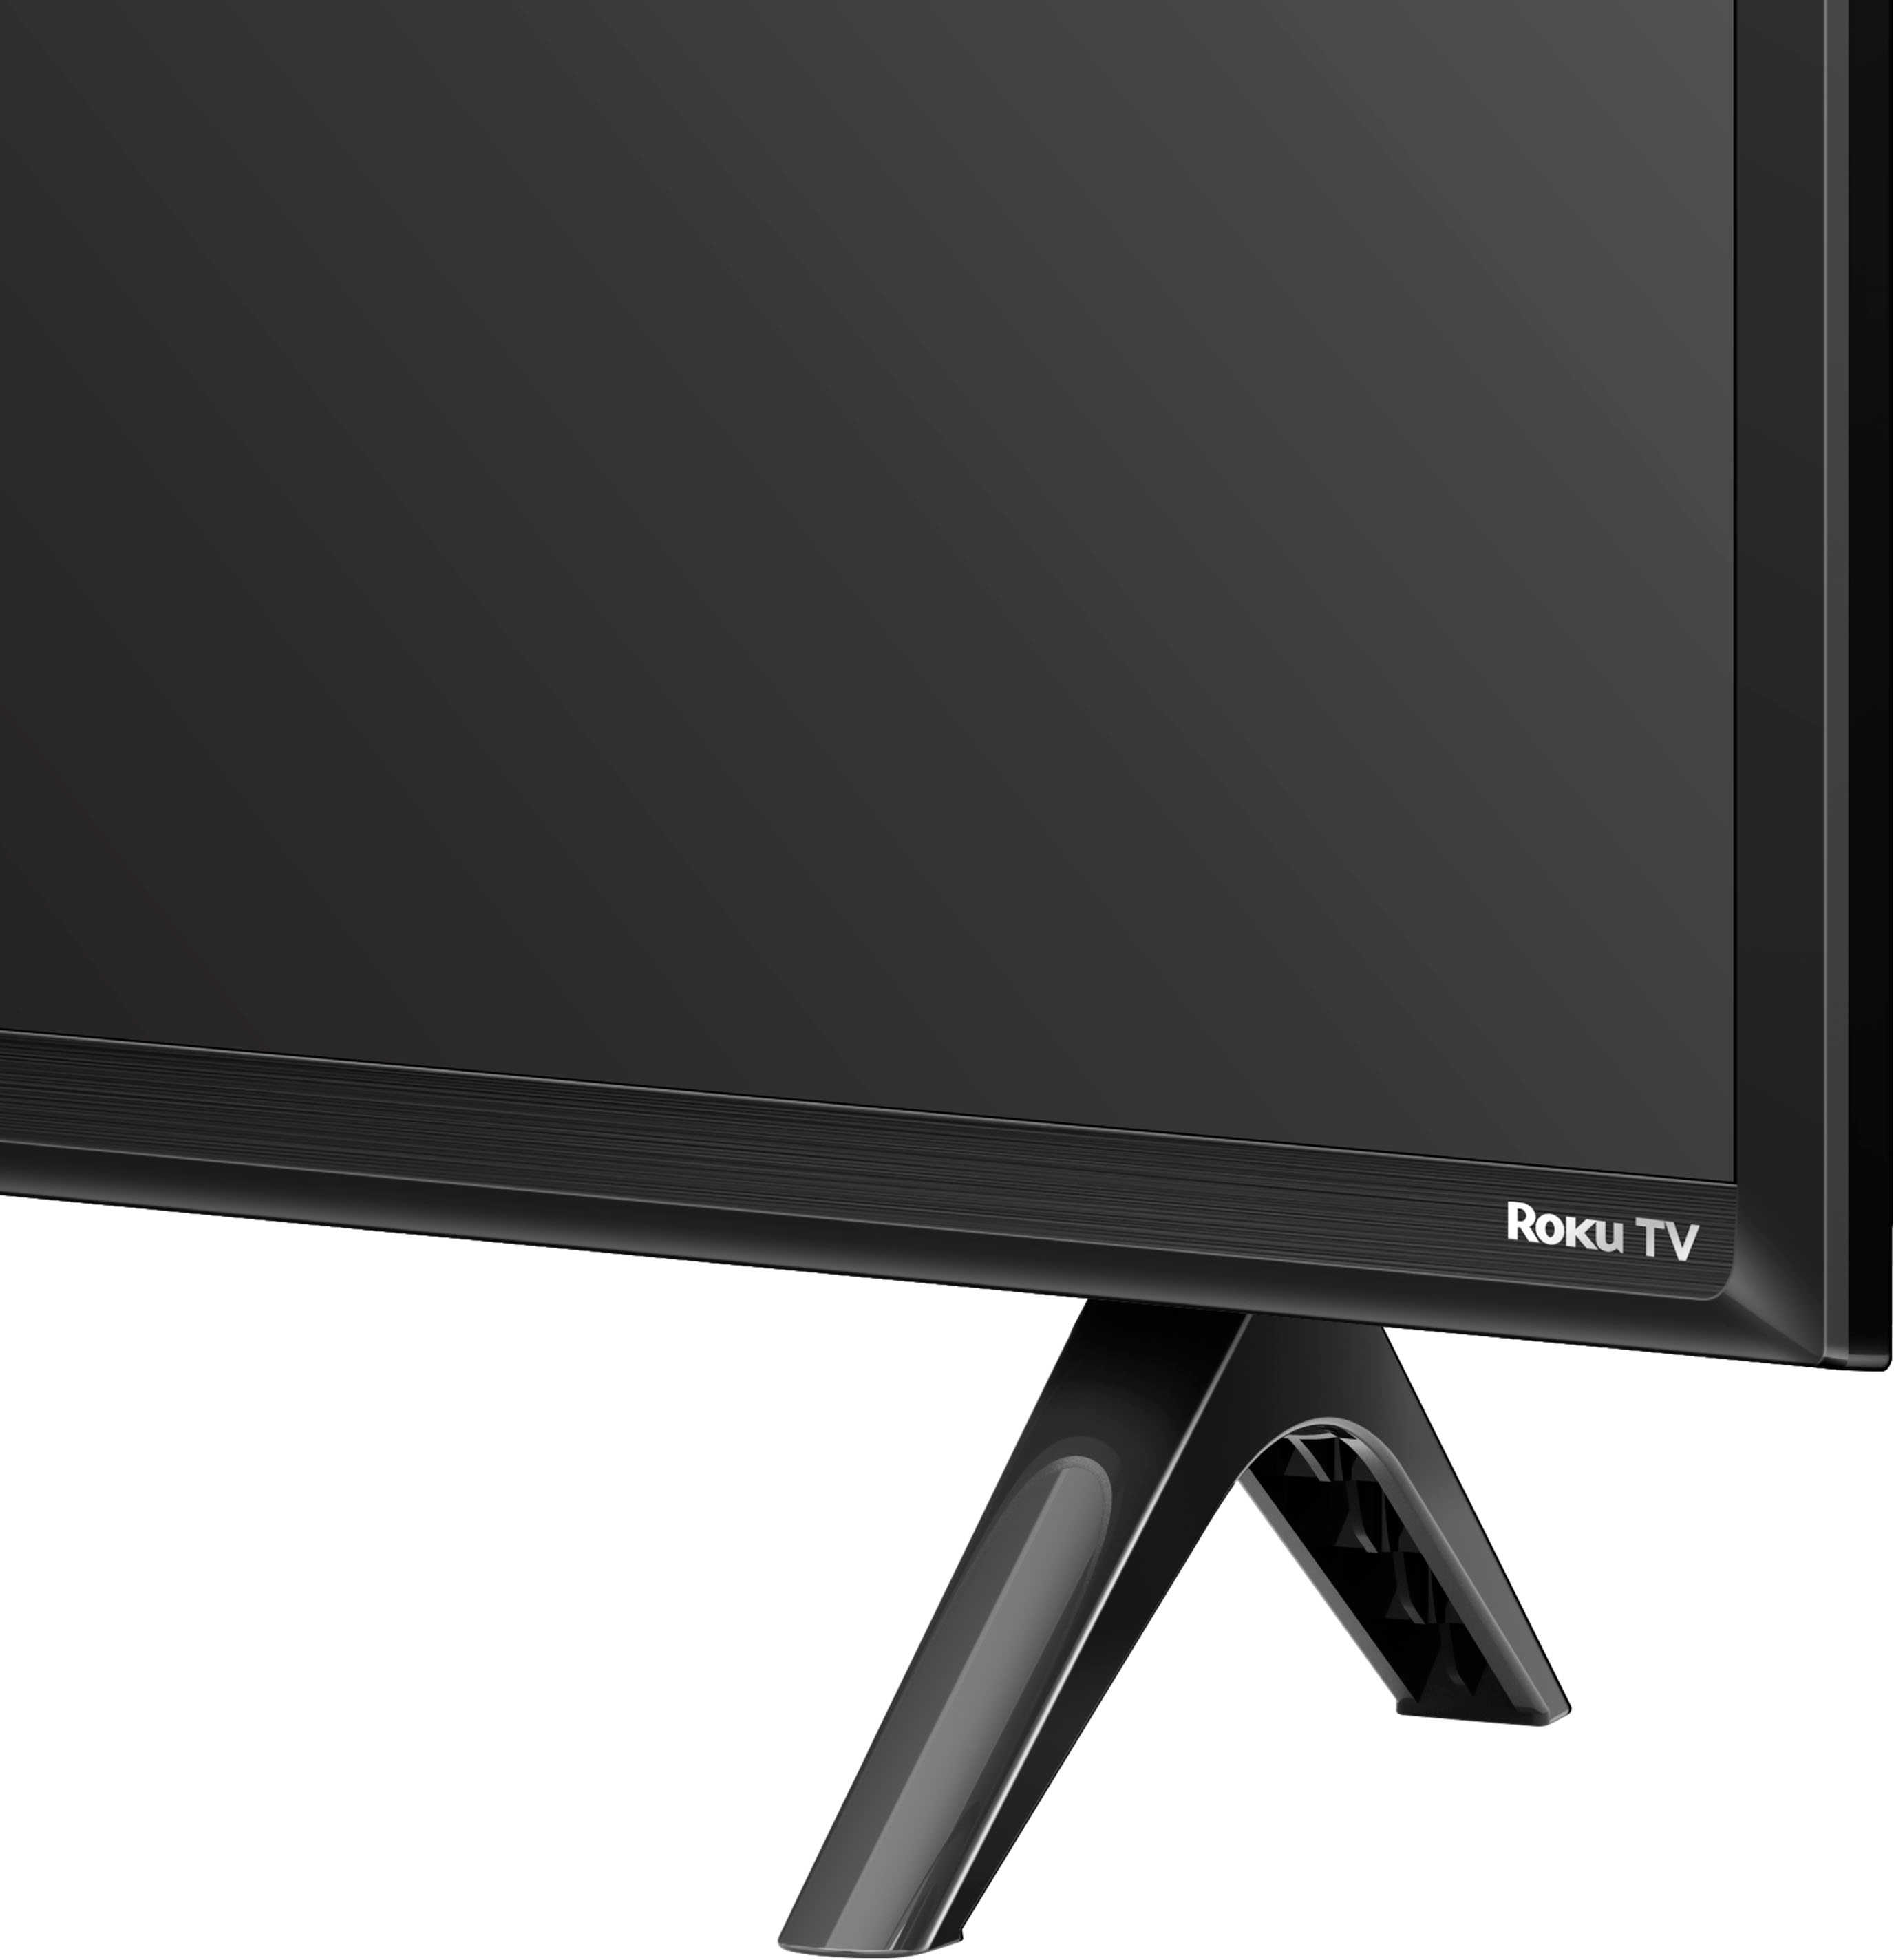 TCL 40-inch 1080p Smart LED Roku TV - 40S325, 2019 Model , Black